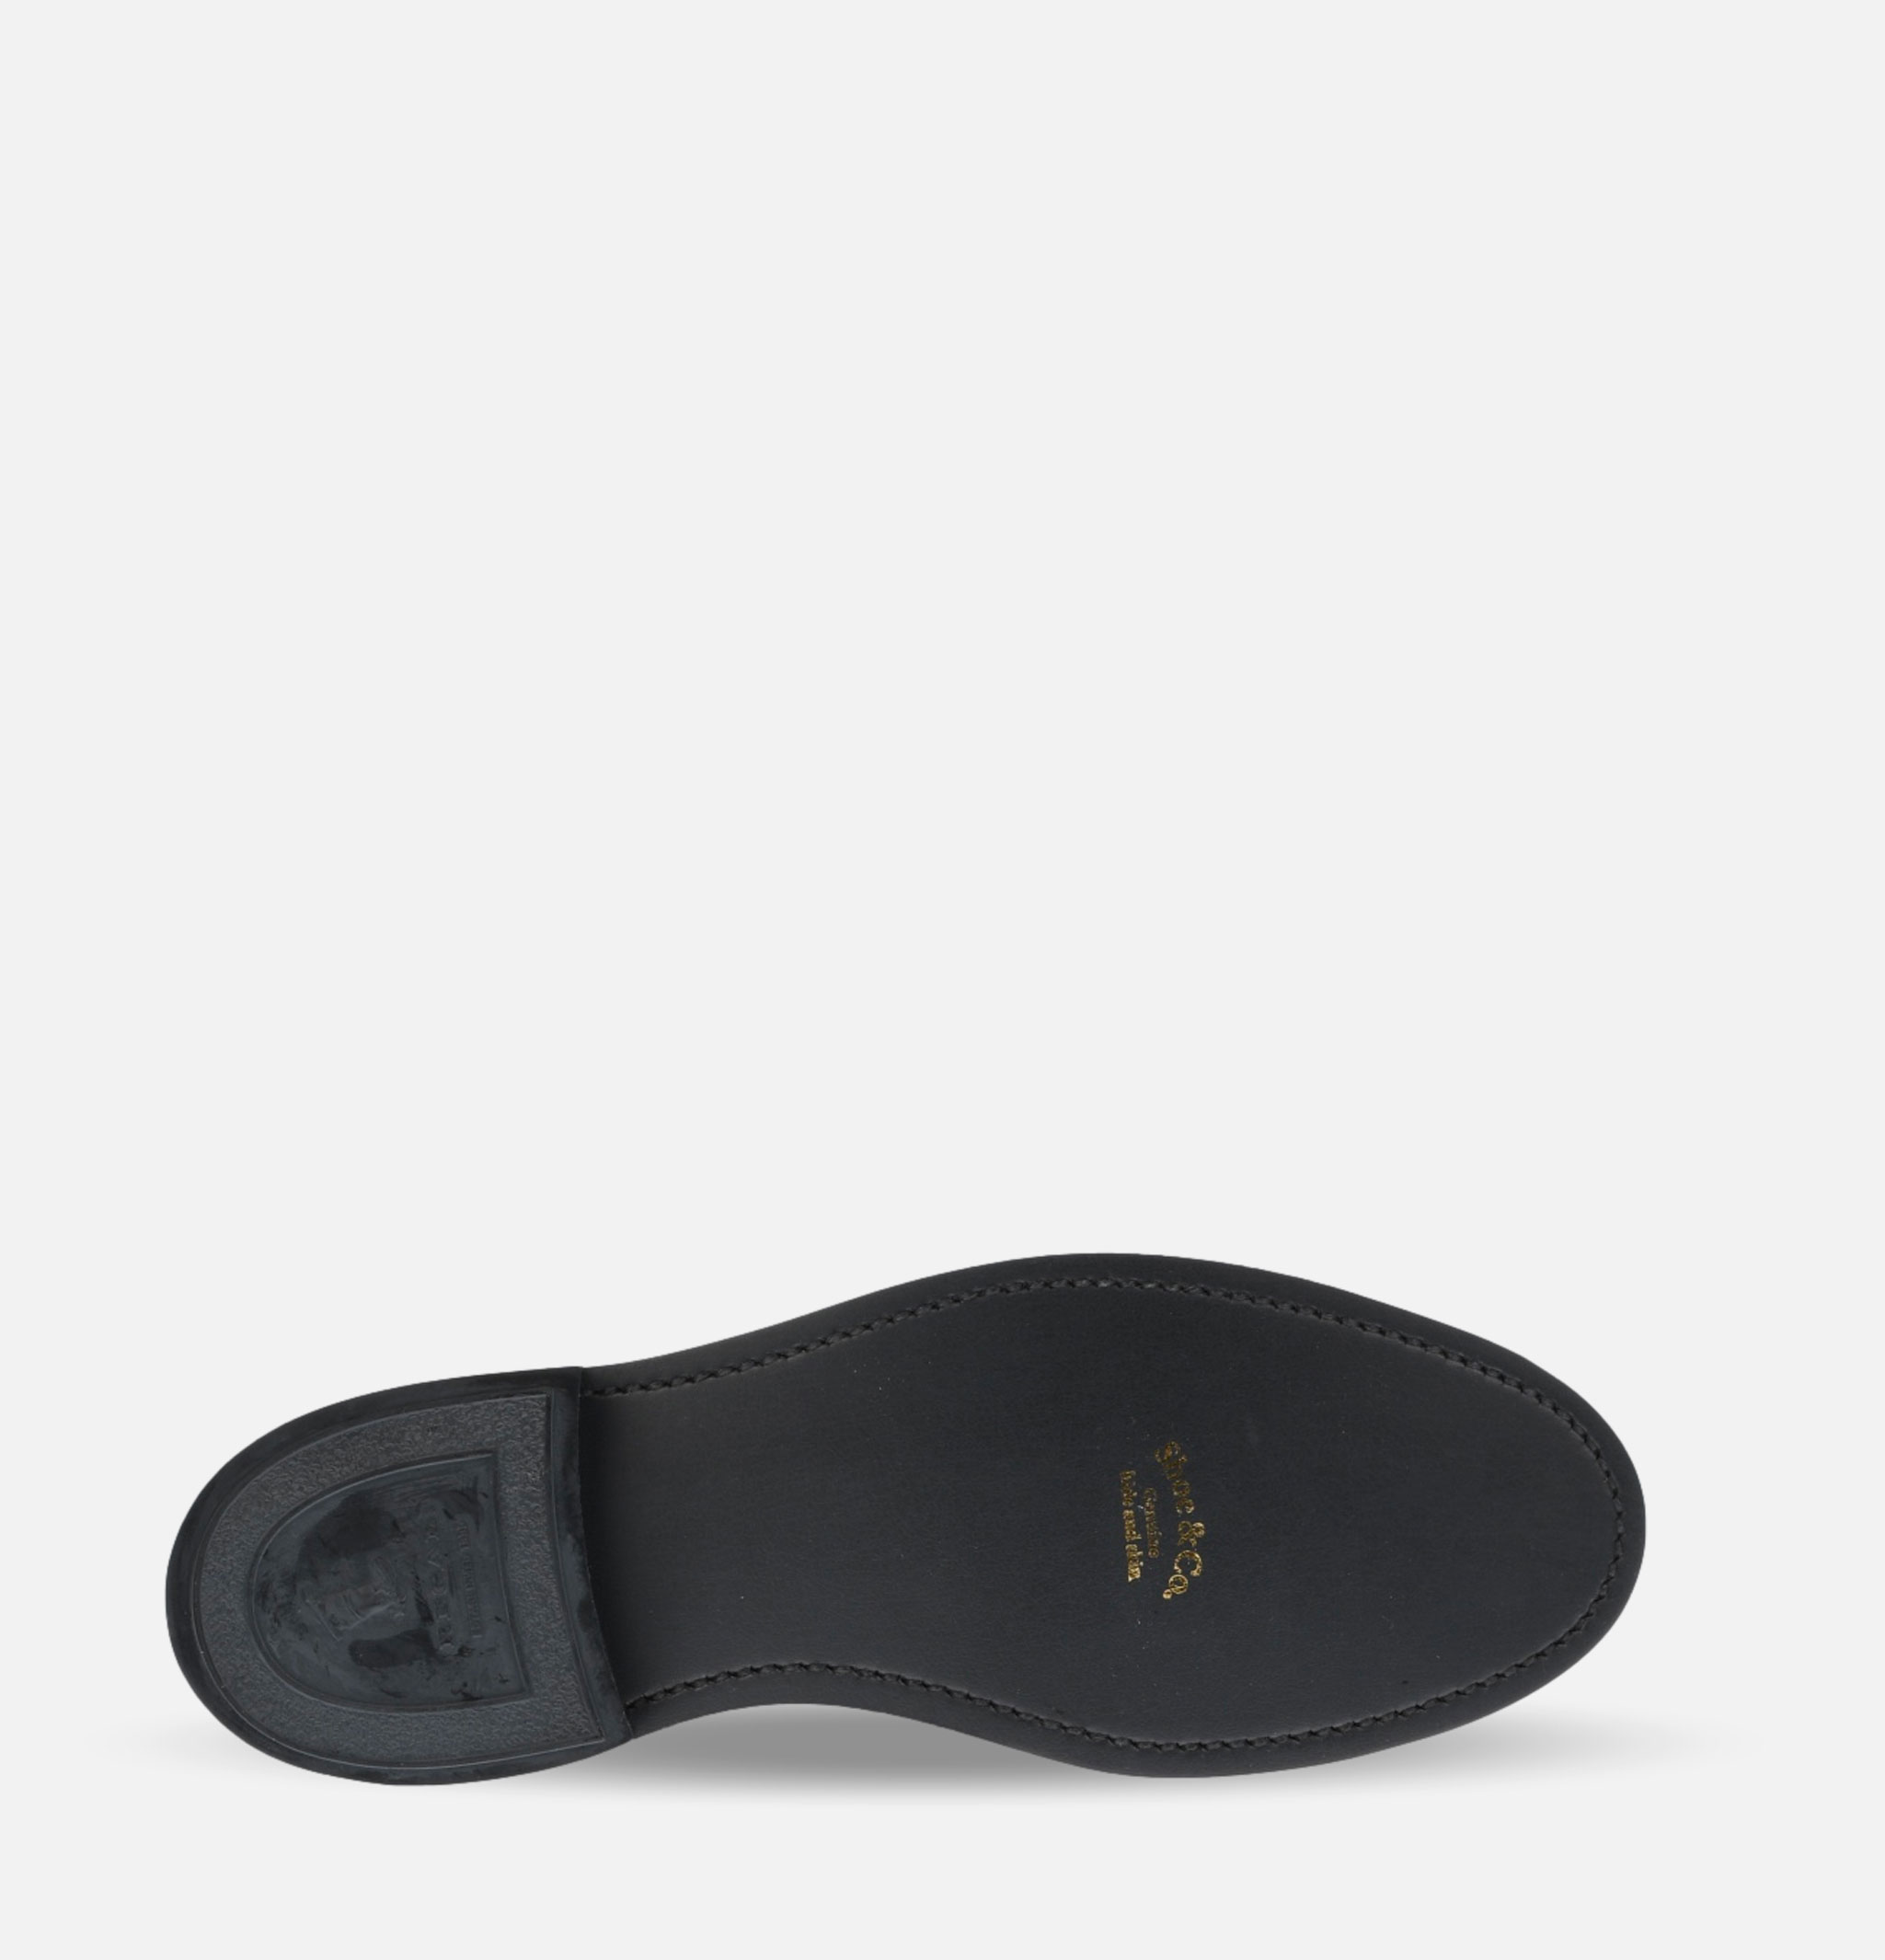 Regal Shoe & Co Plain-toe Shoe Black Gore-tex